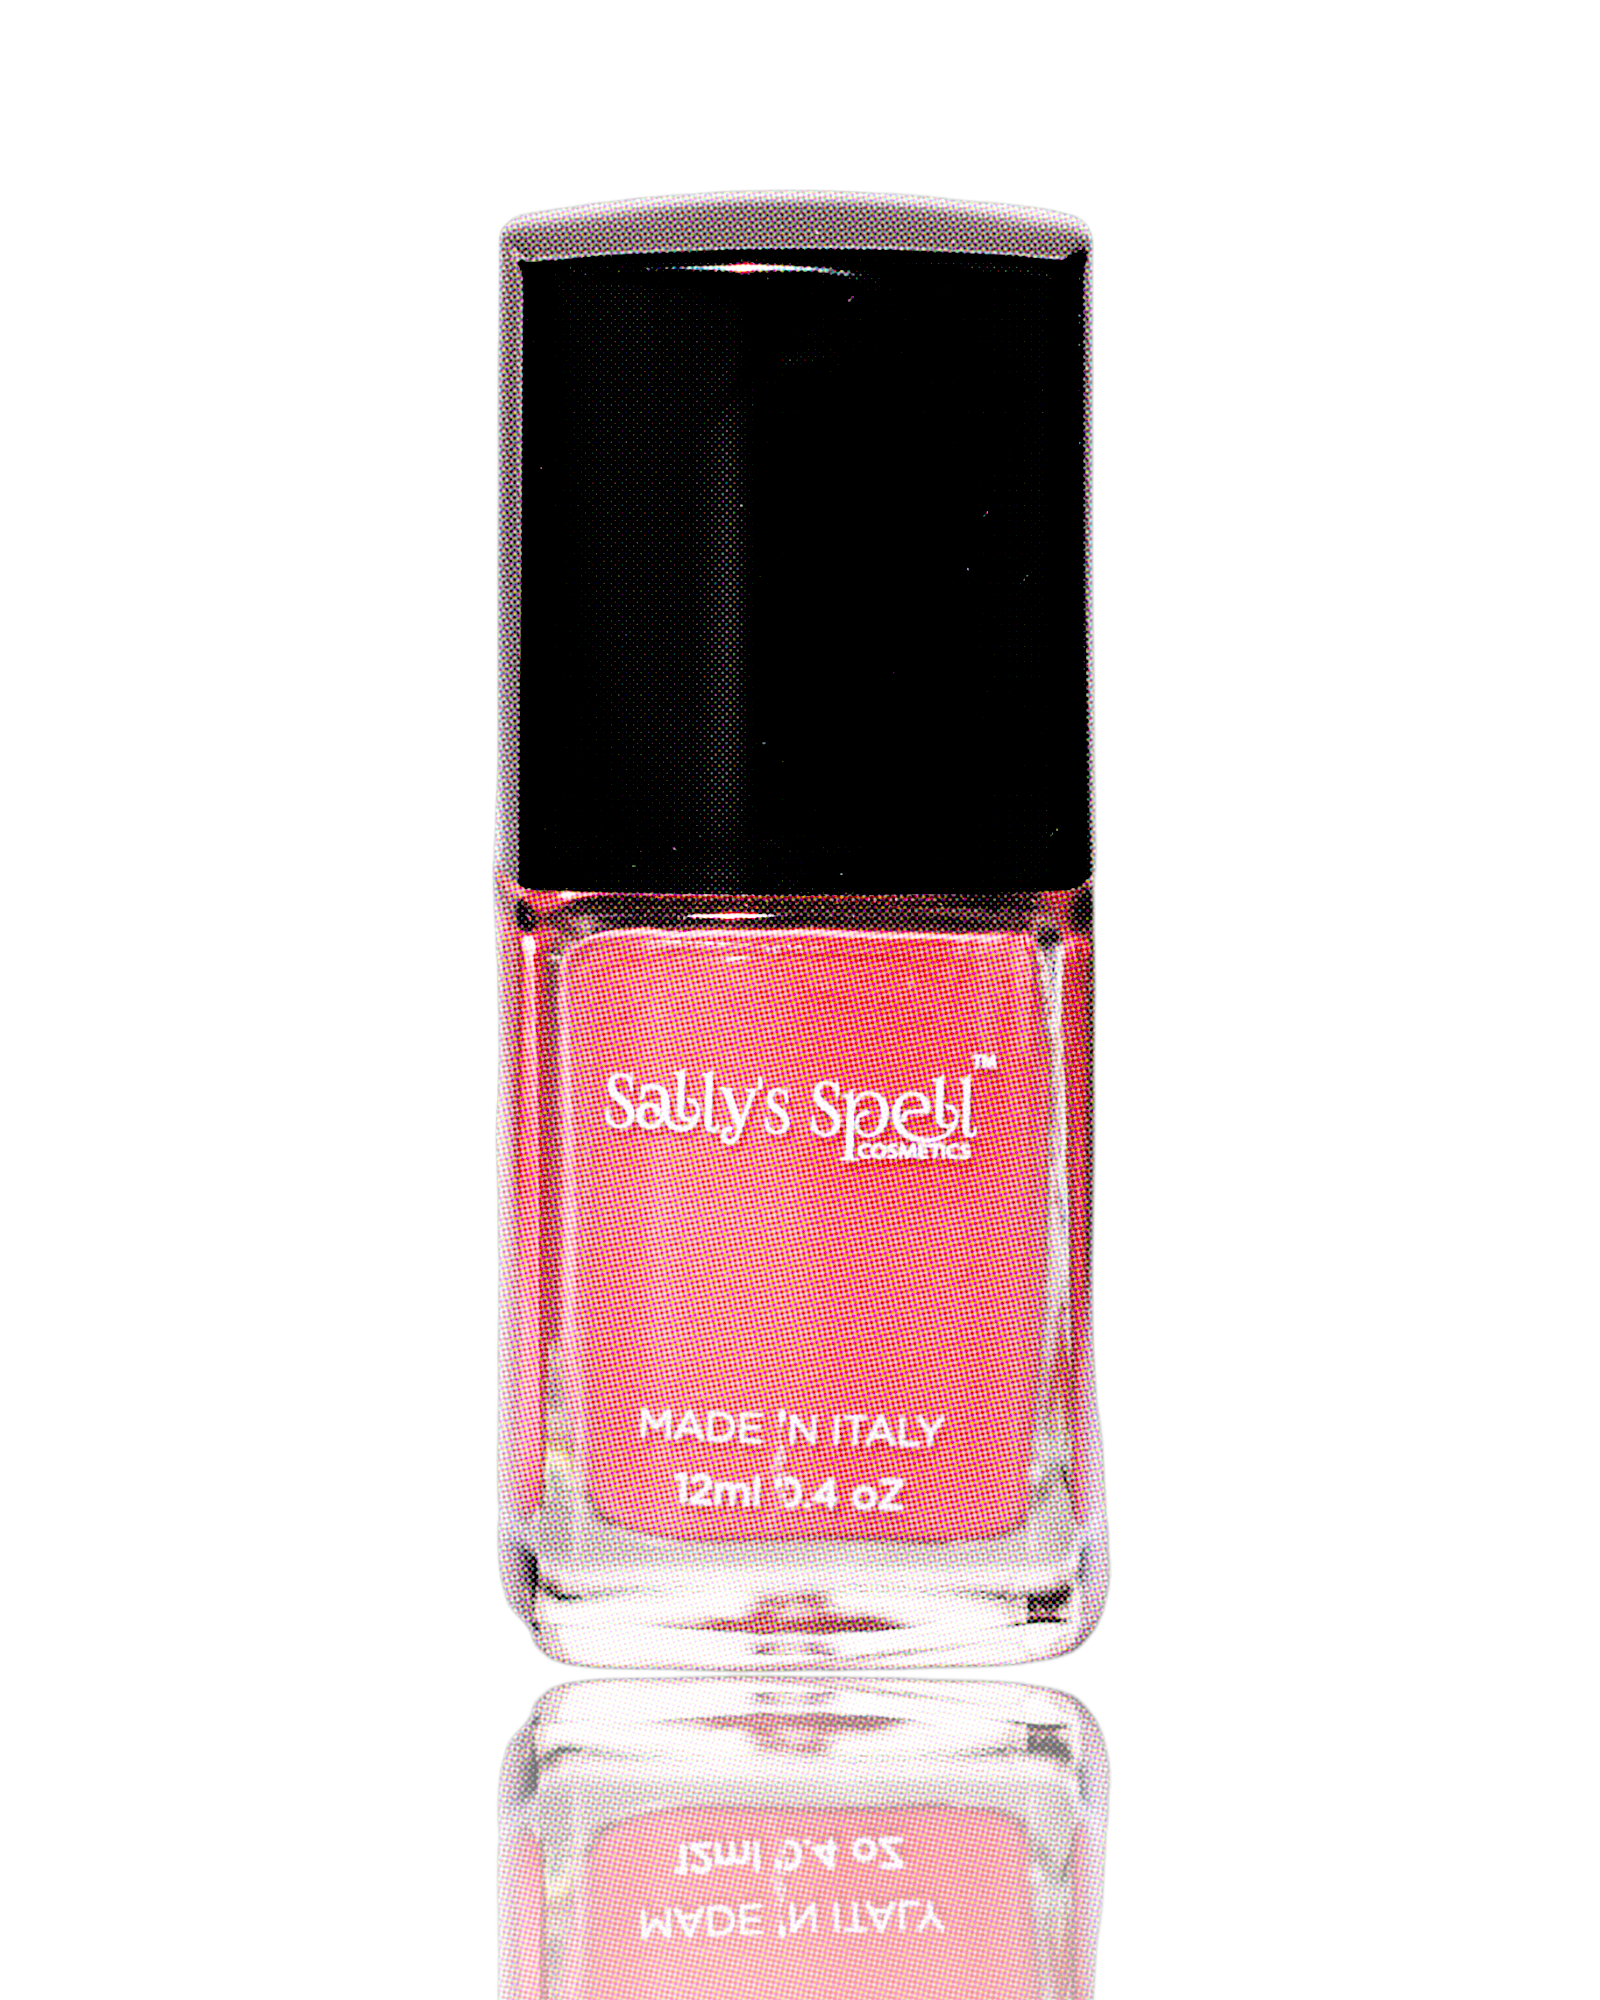 Sally's Spell nail polish - D'Angelo